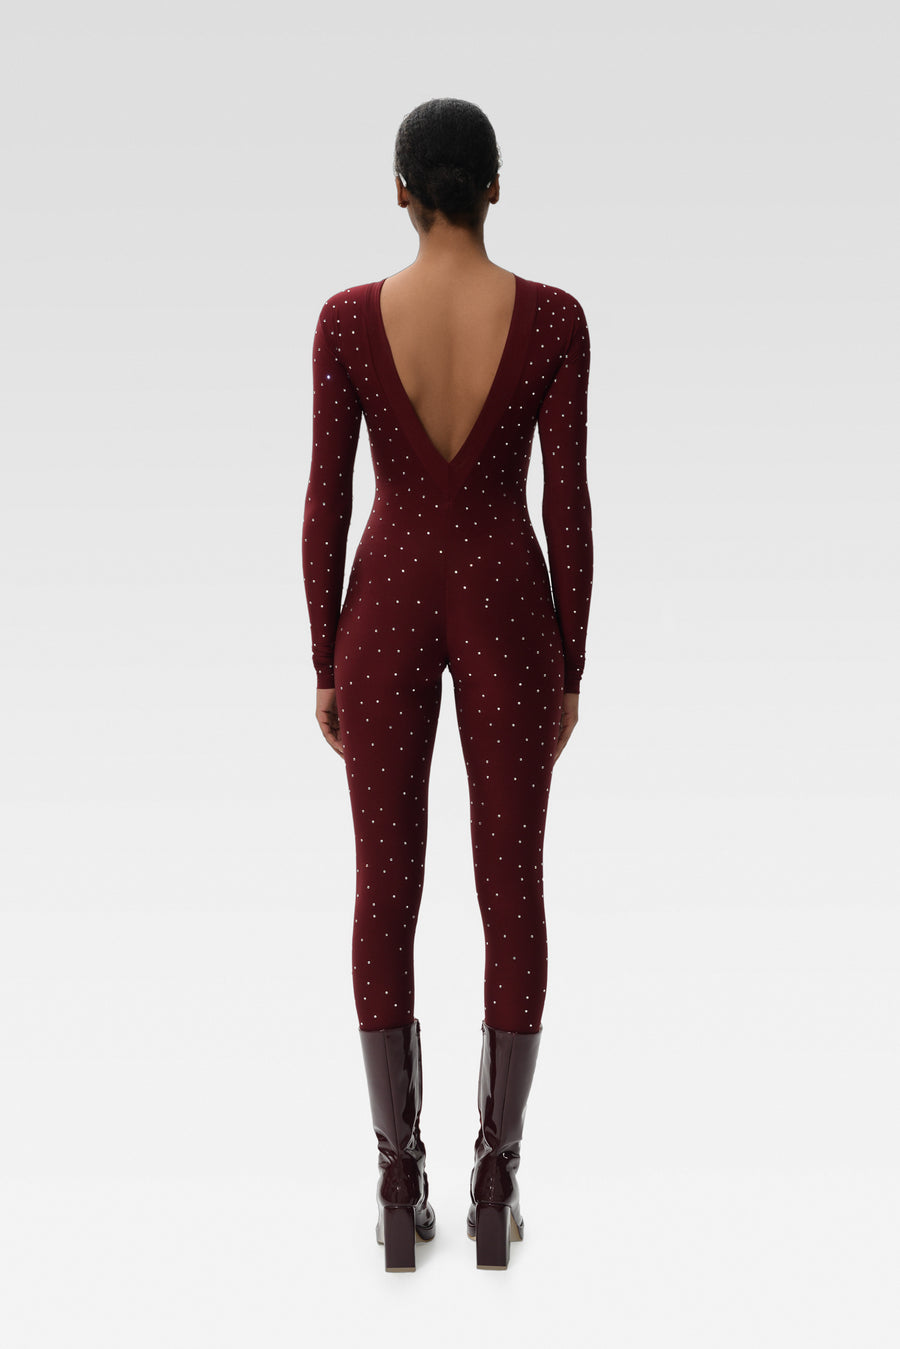 Burgundy Bodysuit with Sparkling Details